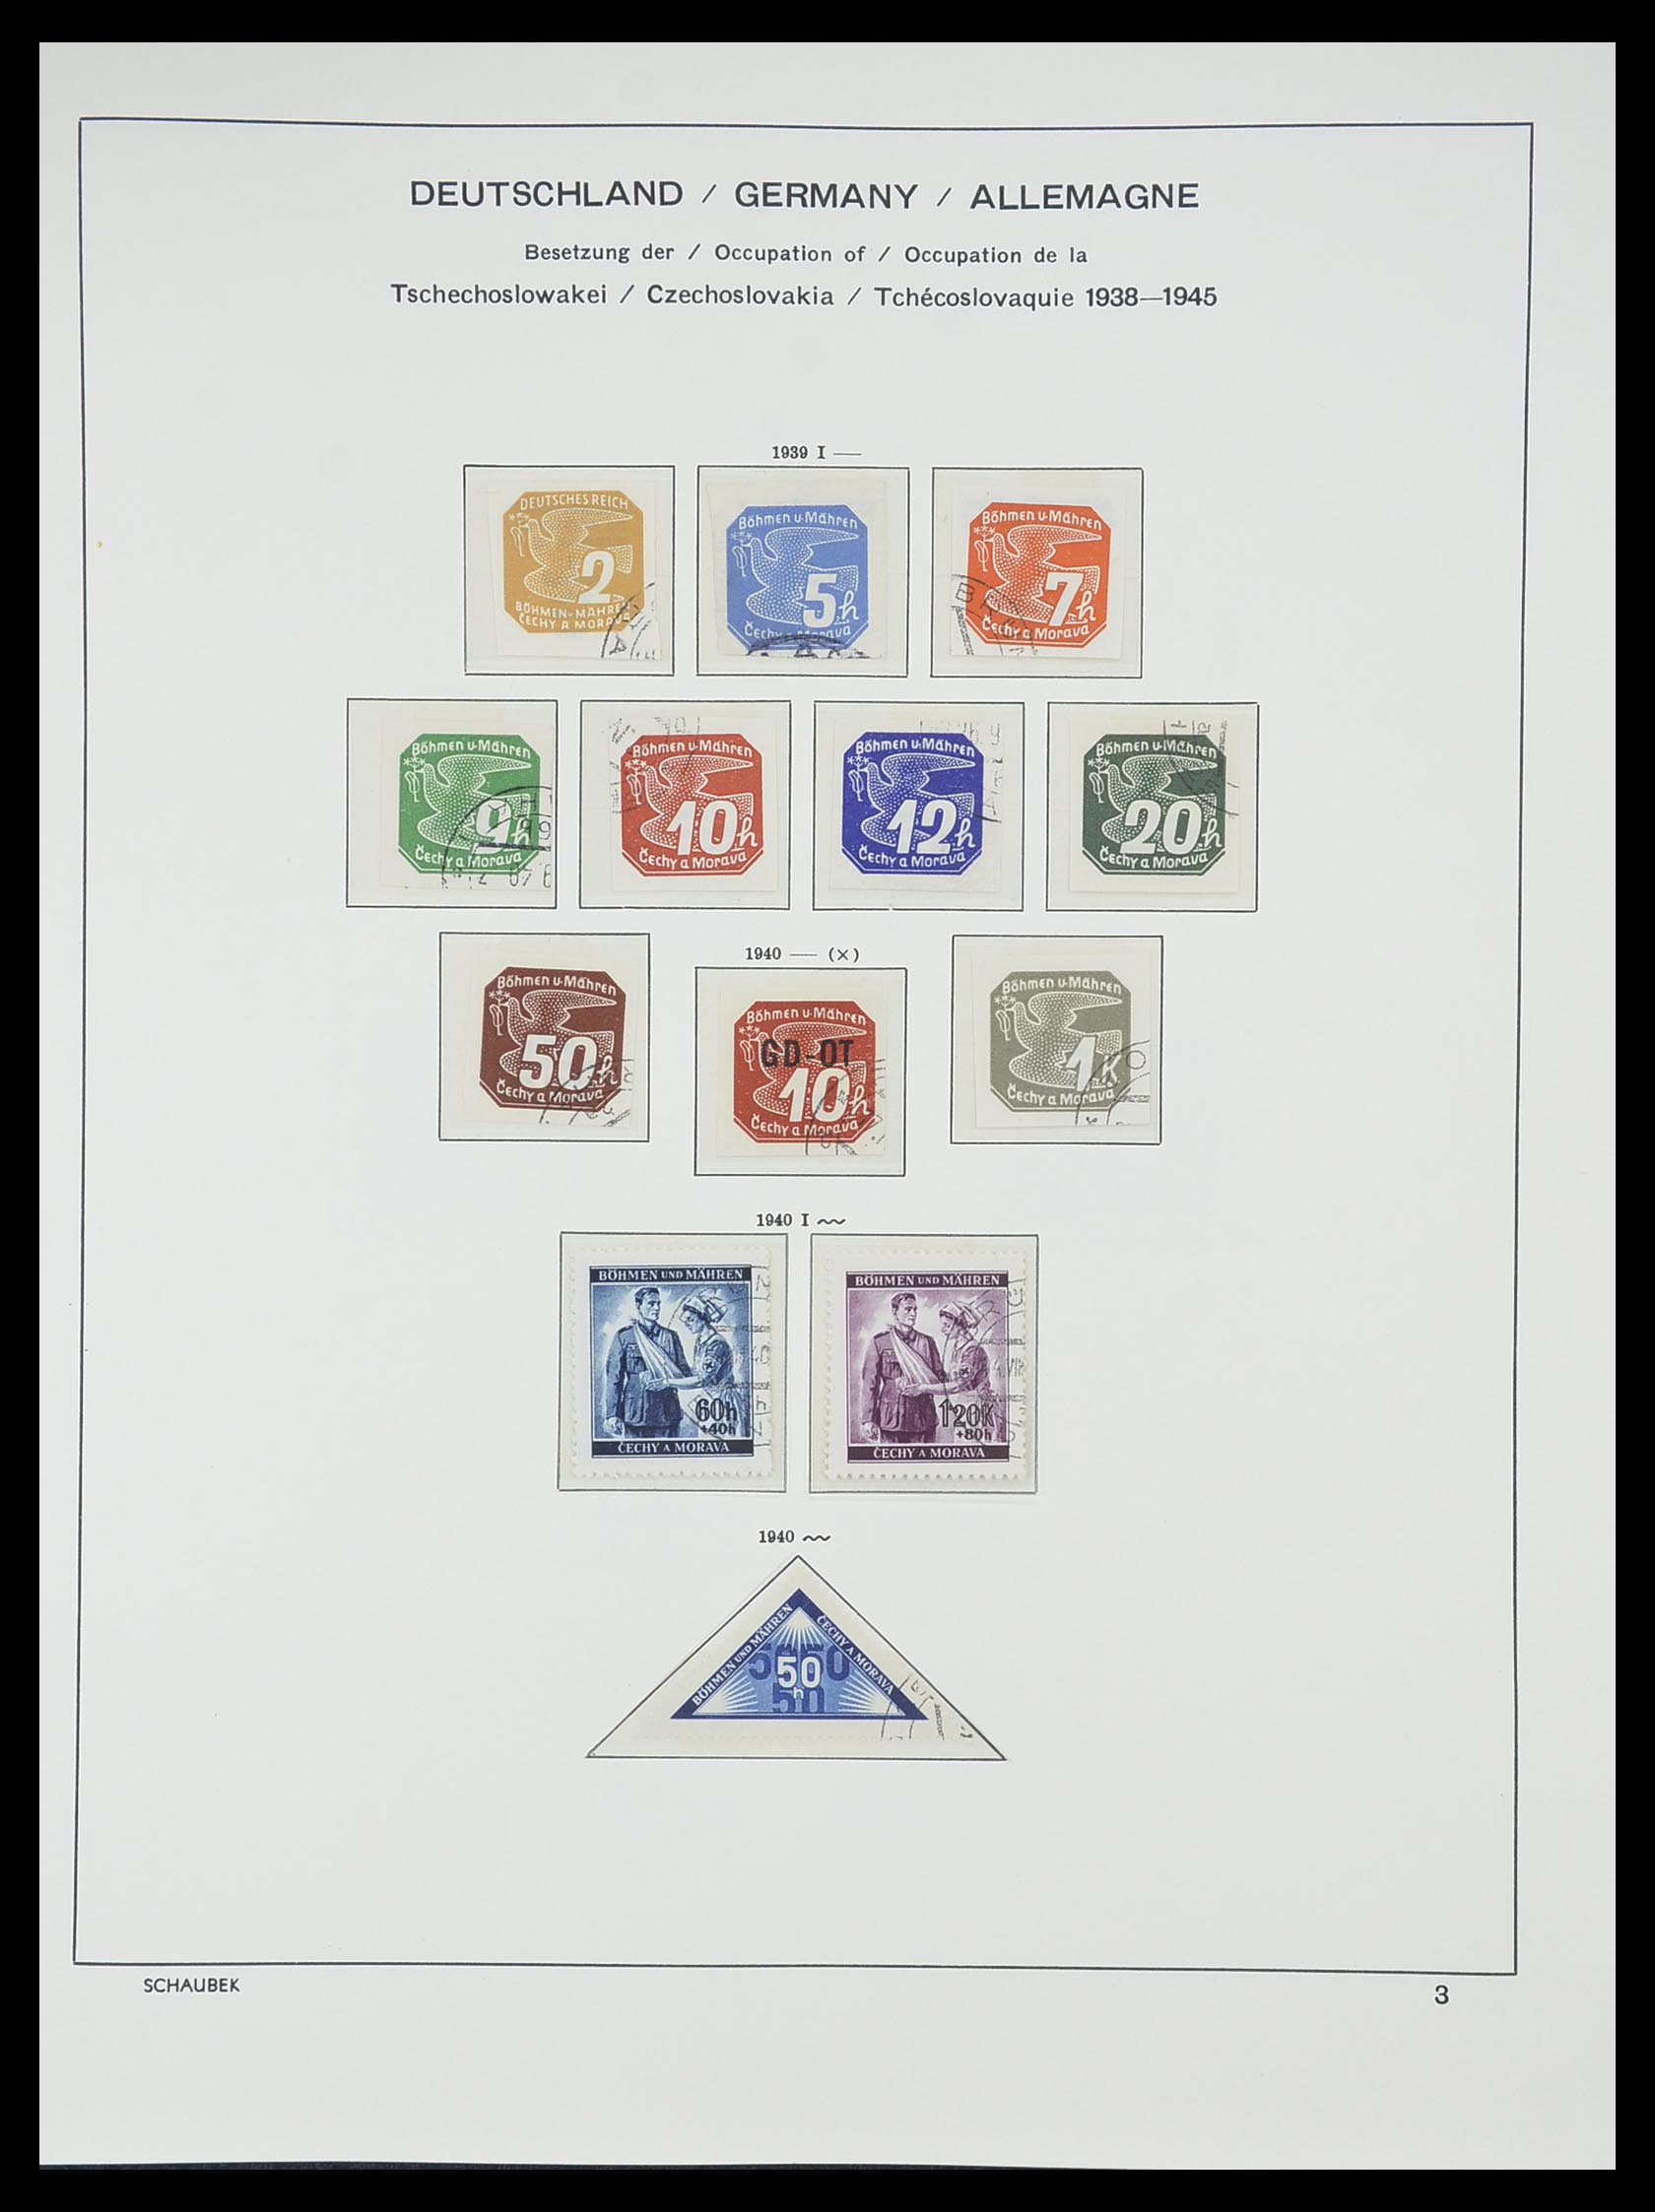 33697 095 - Stamp collection 33697 German Reich 1872-1945.